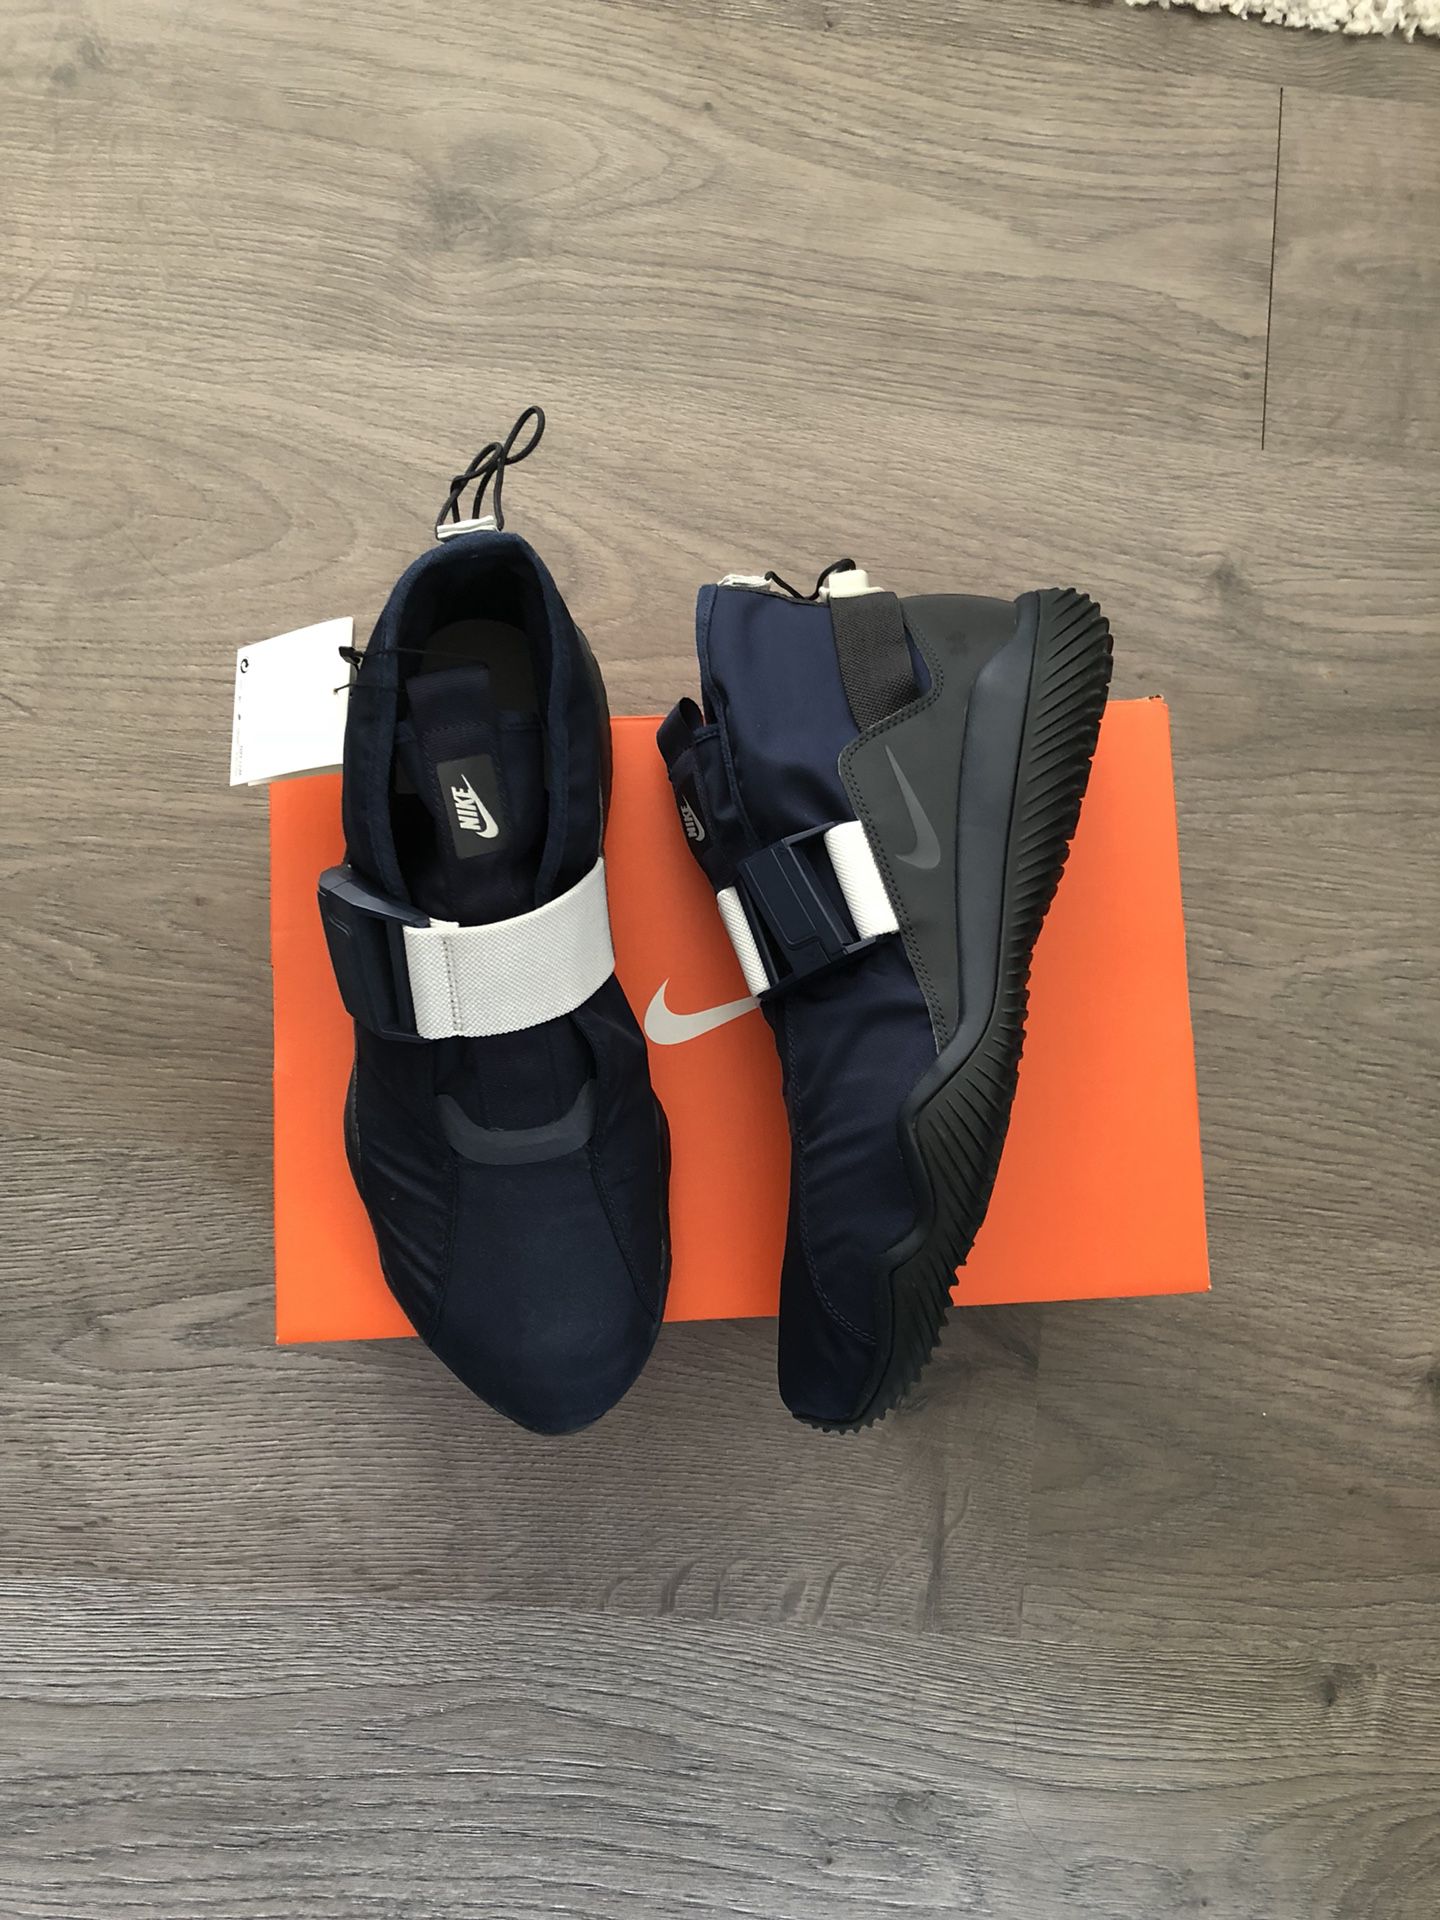 Men’s Nike konyuter Se- dark blue - Size 12- BRAND NEW WITH TAGS